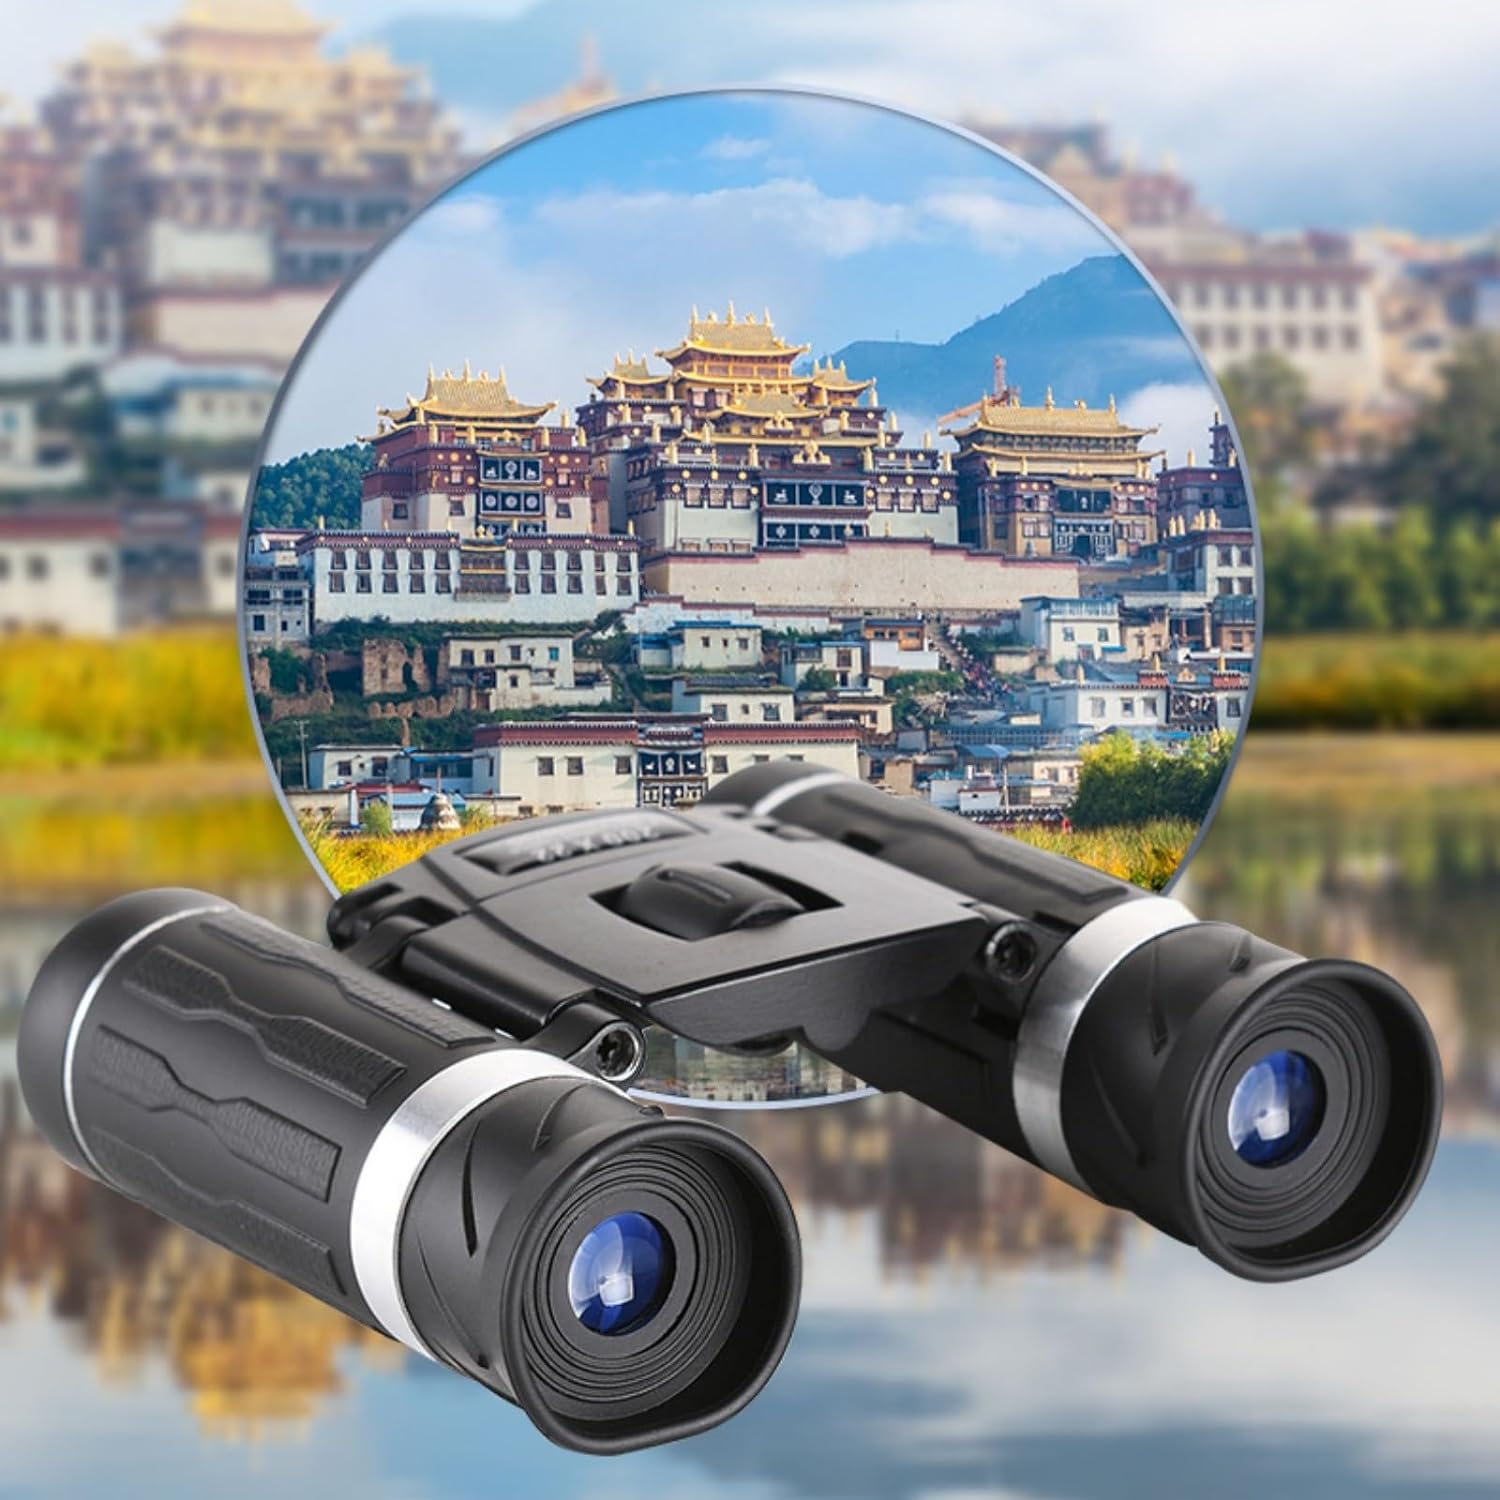 22x40 Zoom Binoculars - Phone High Power Binoculars - Large View Binoculars - Portable Durable Binoculars for Sightseeing, Concerts, Bird Watching, Concerts